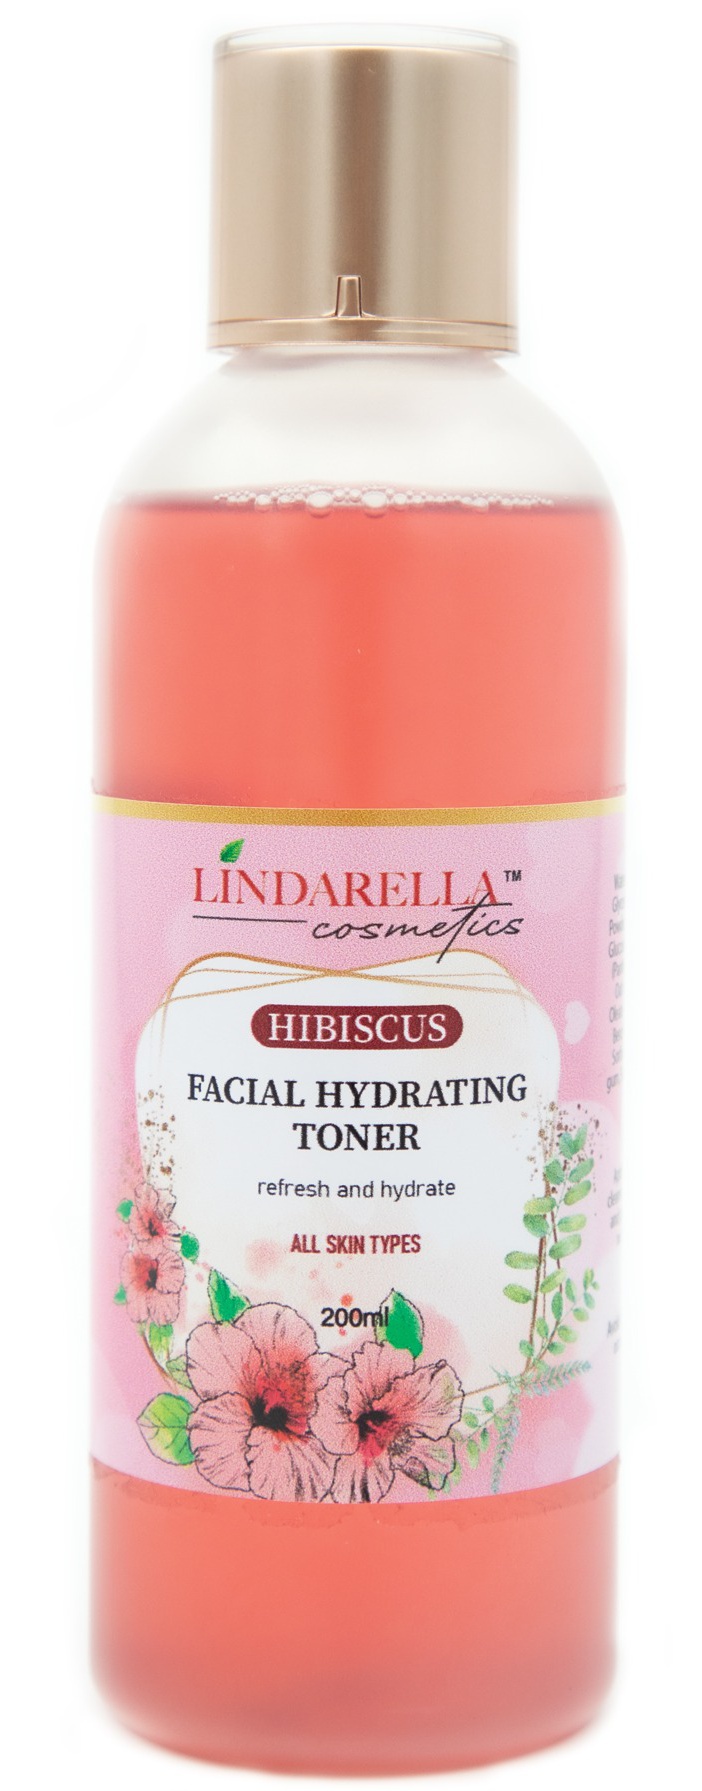 Lindarella Cosmetics Hibiscus Facial Hydrating Toner